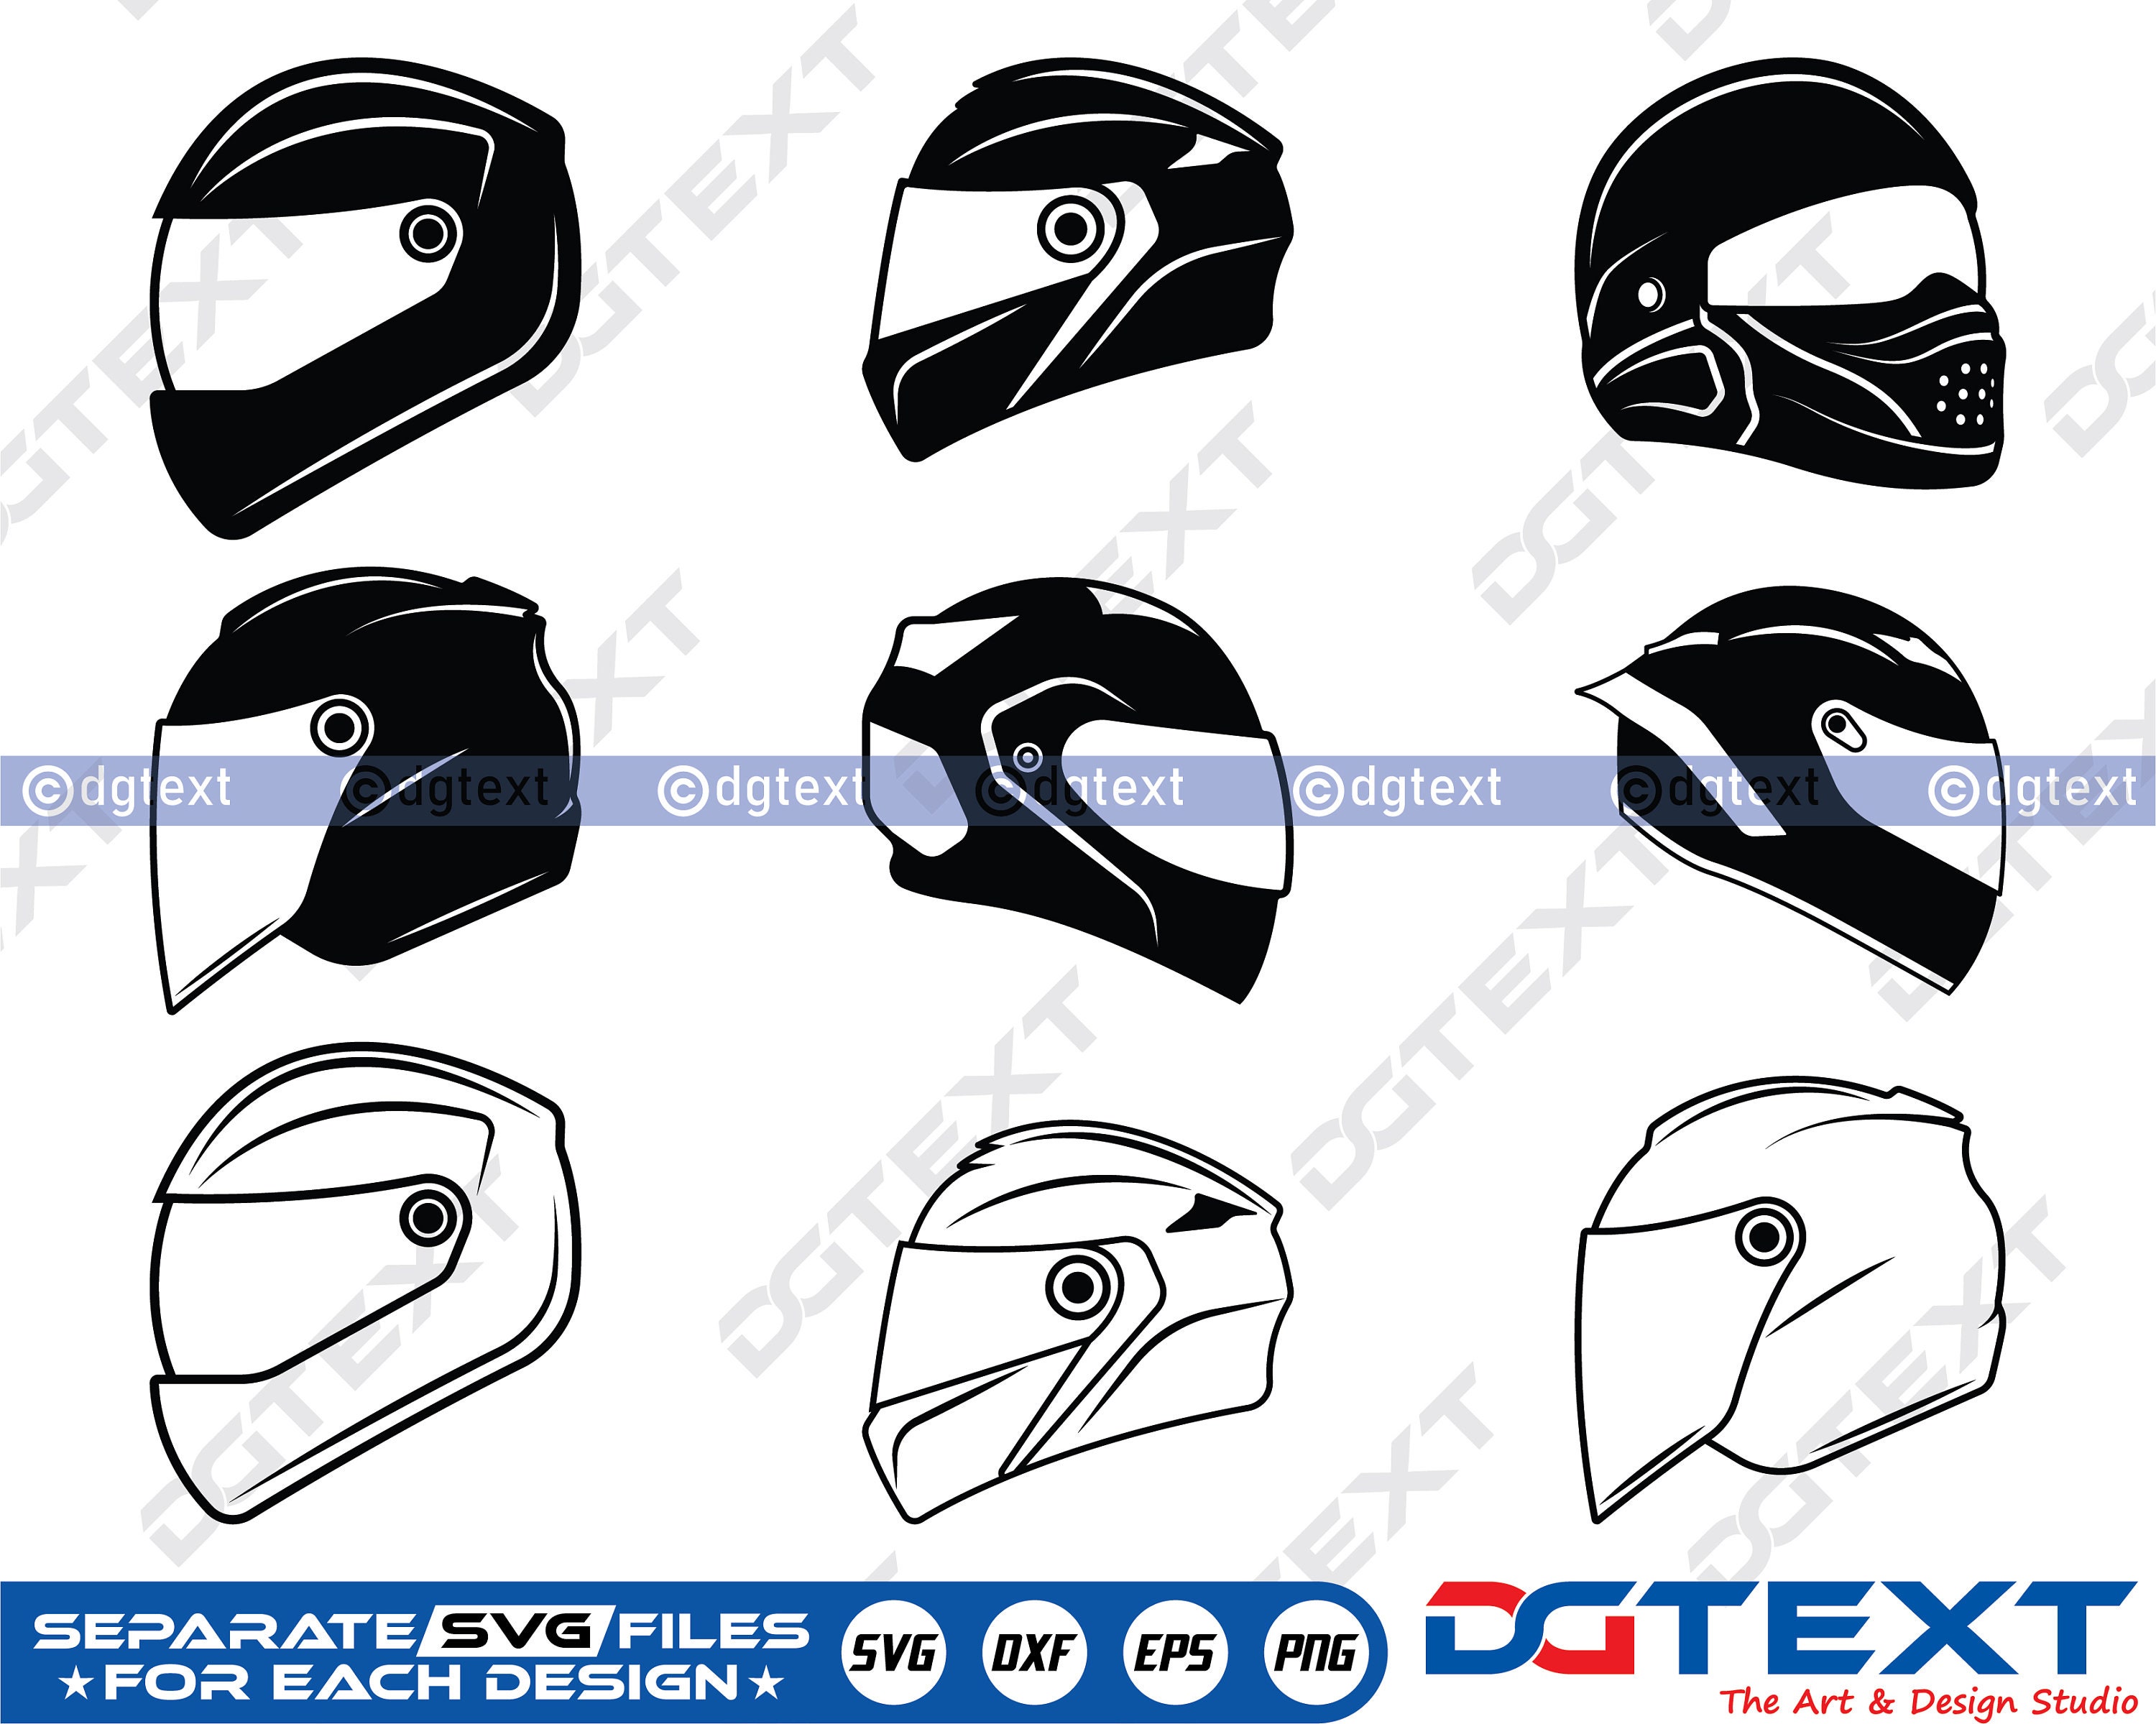 cascos de moto en moto con maleta vieja 12397674 Foto de stock en Vecteezy